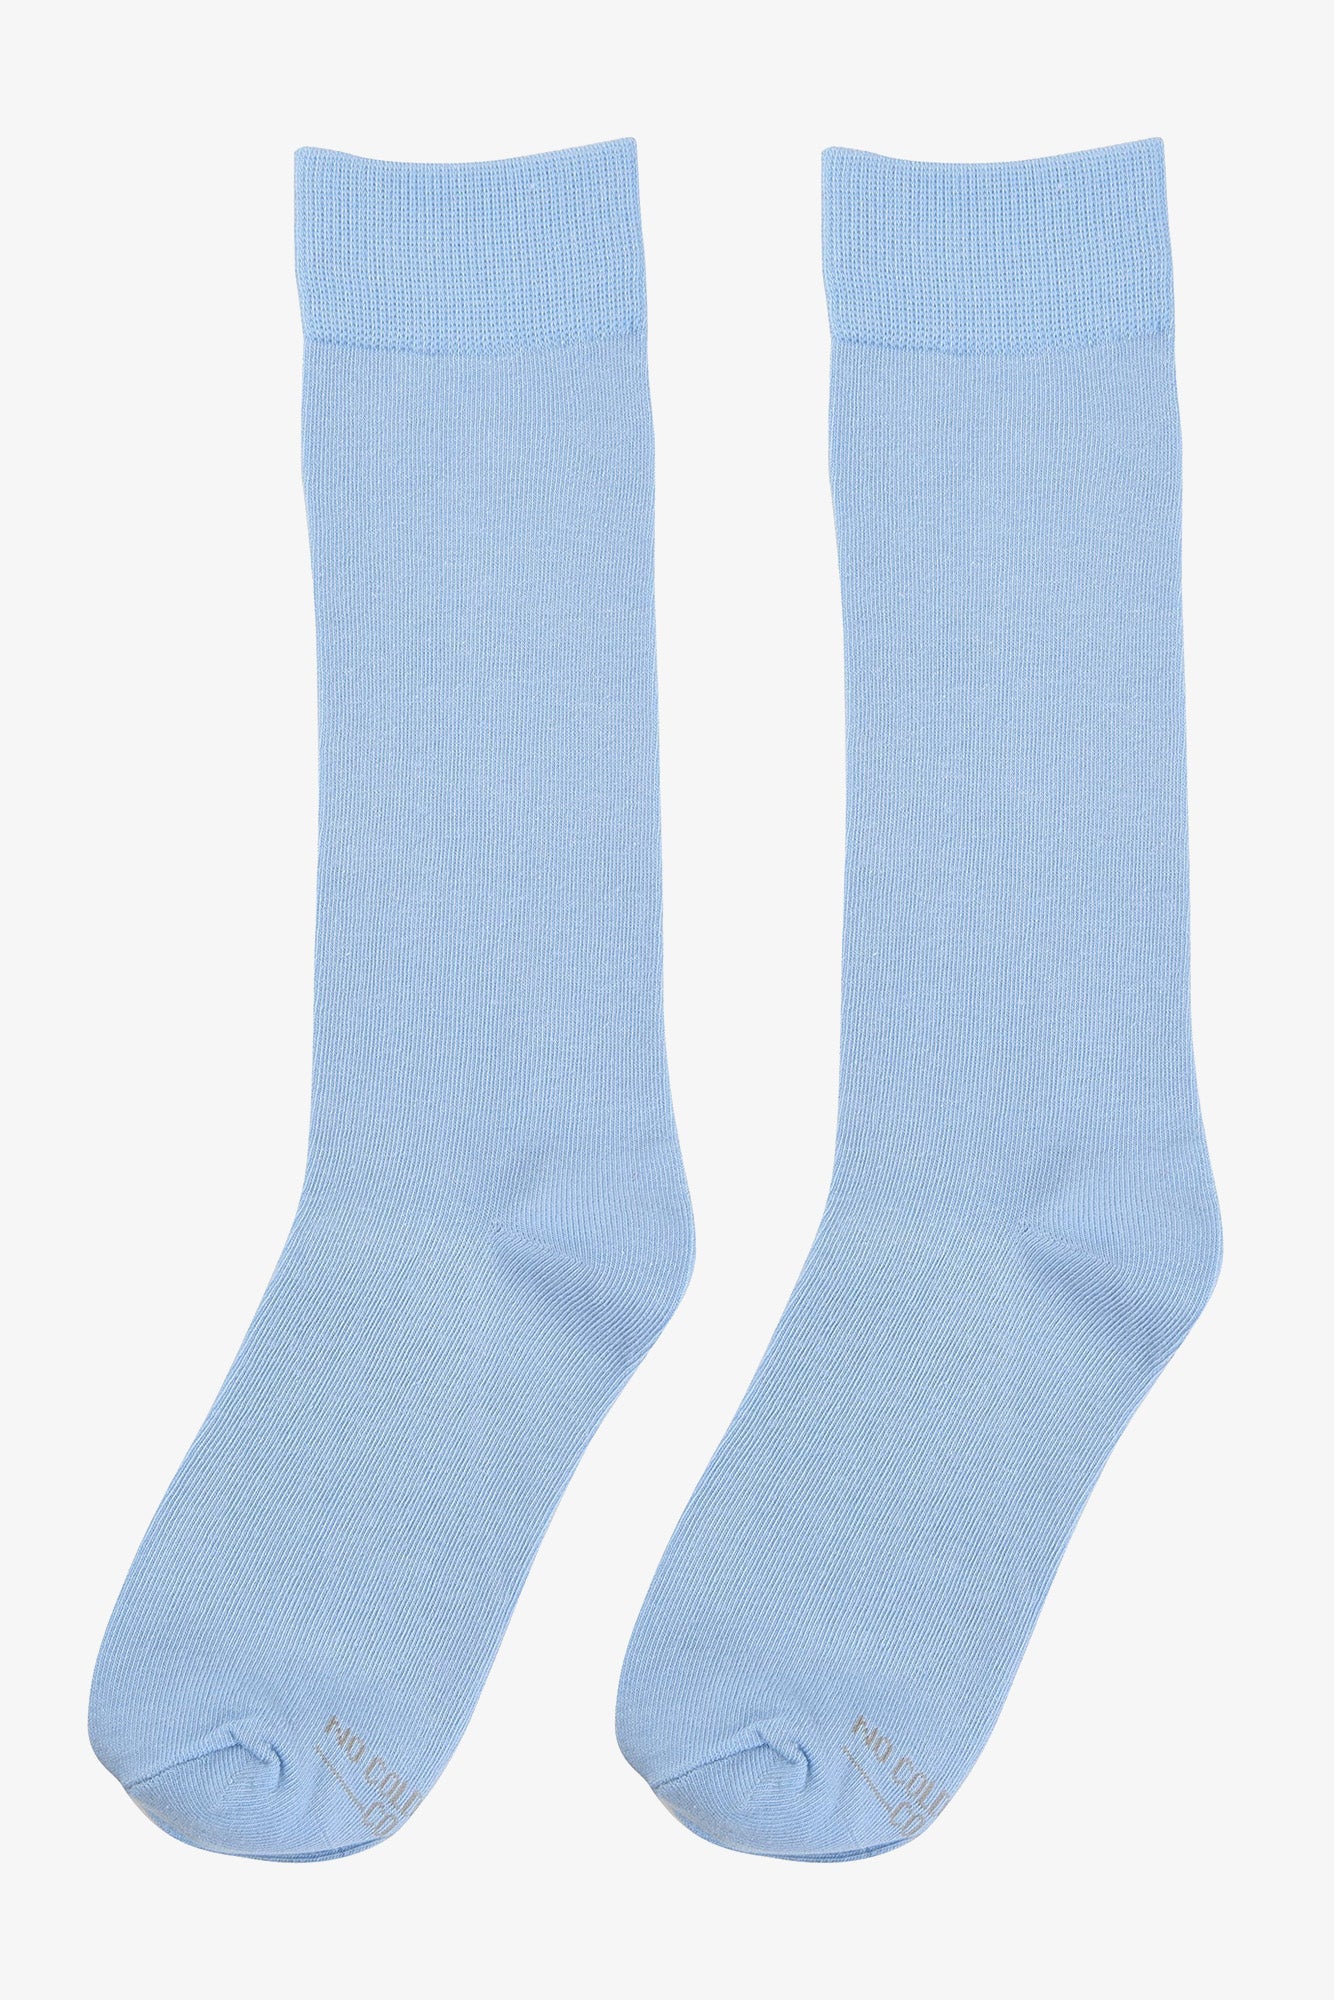 Solid Groomsmen Socks By No Cold Feet - Sky Blue